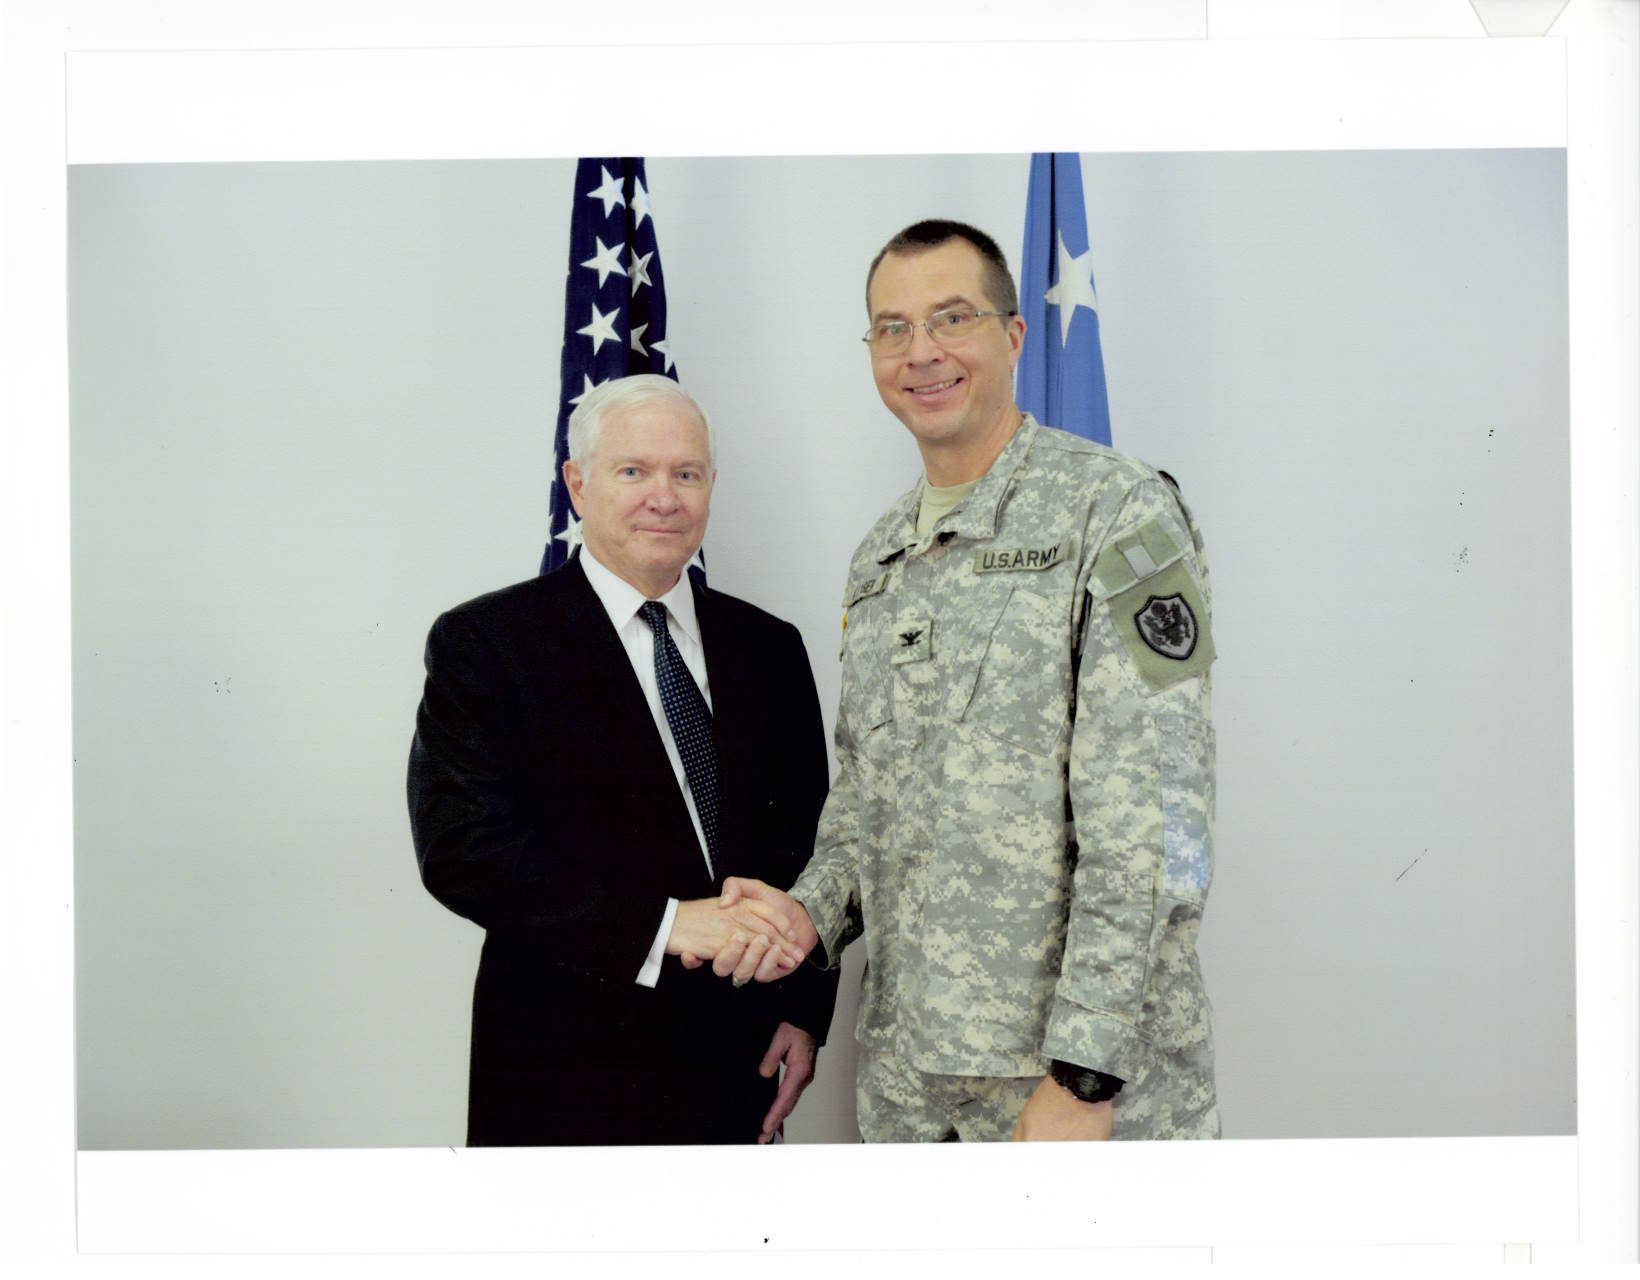 Secretary of Defense Robert Gates and Col. Gary Kayser shaking hands